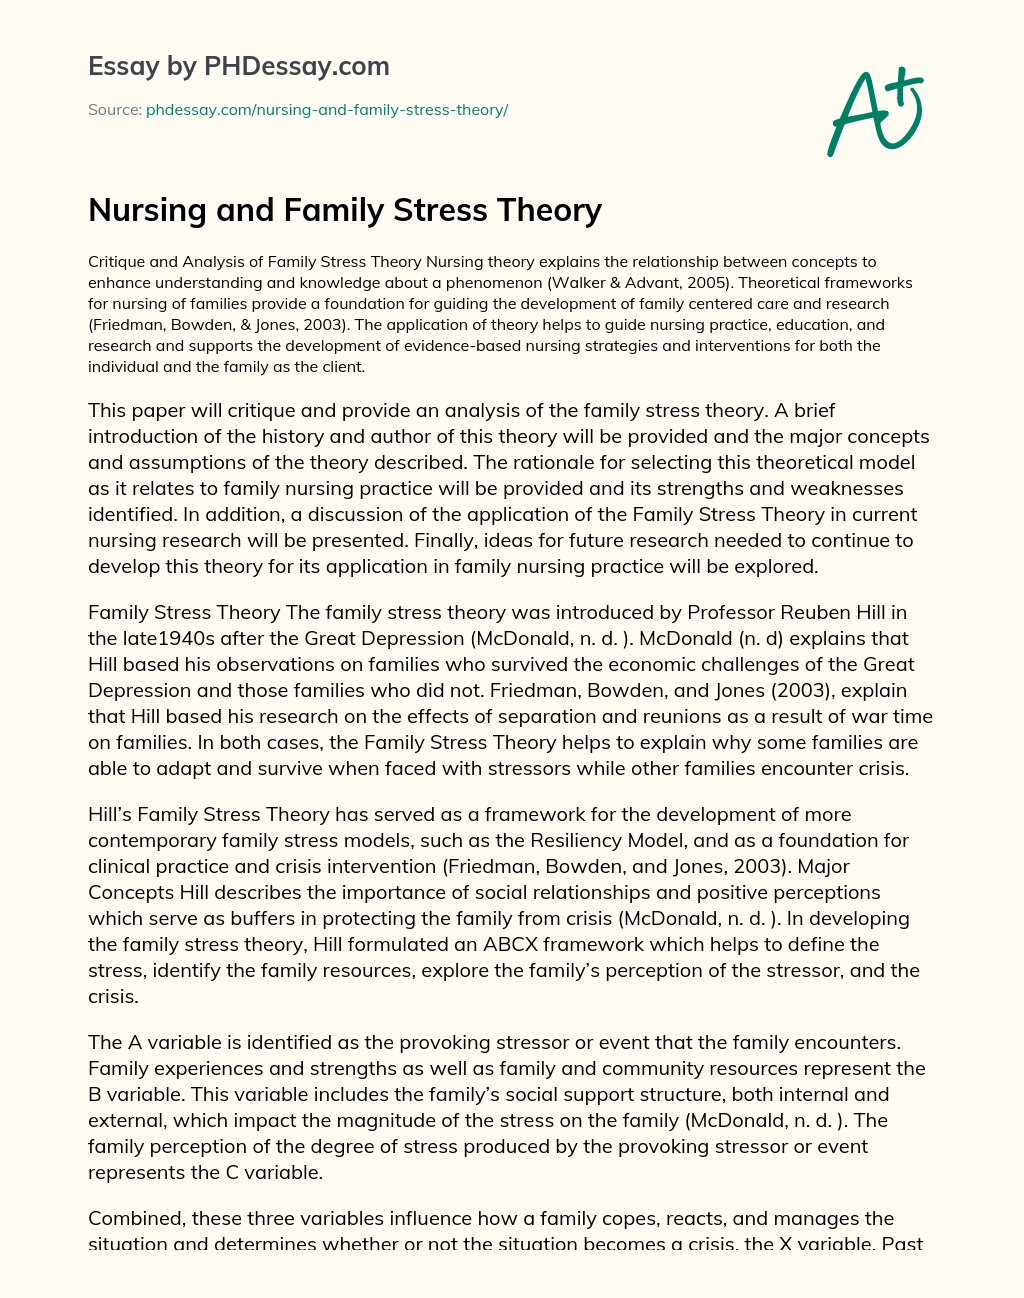 Nursing and Family Stress Theory essay